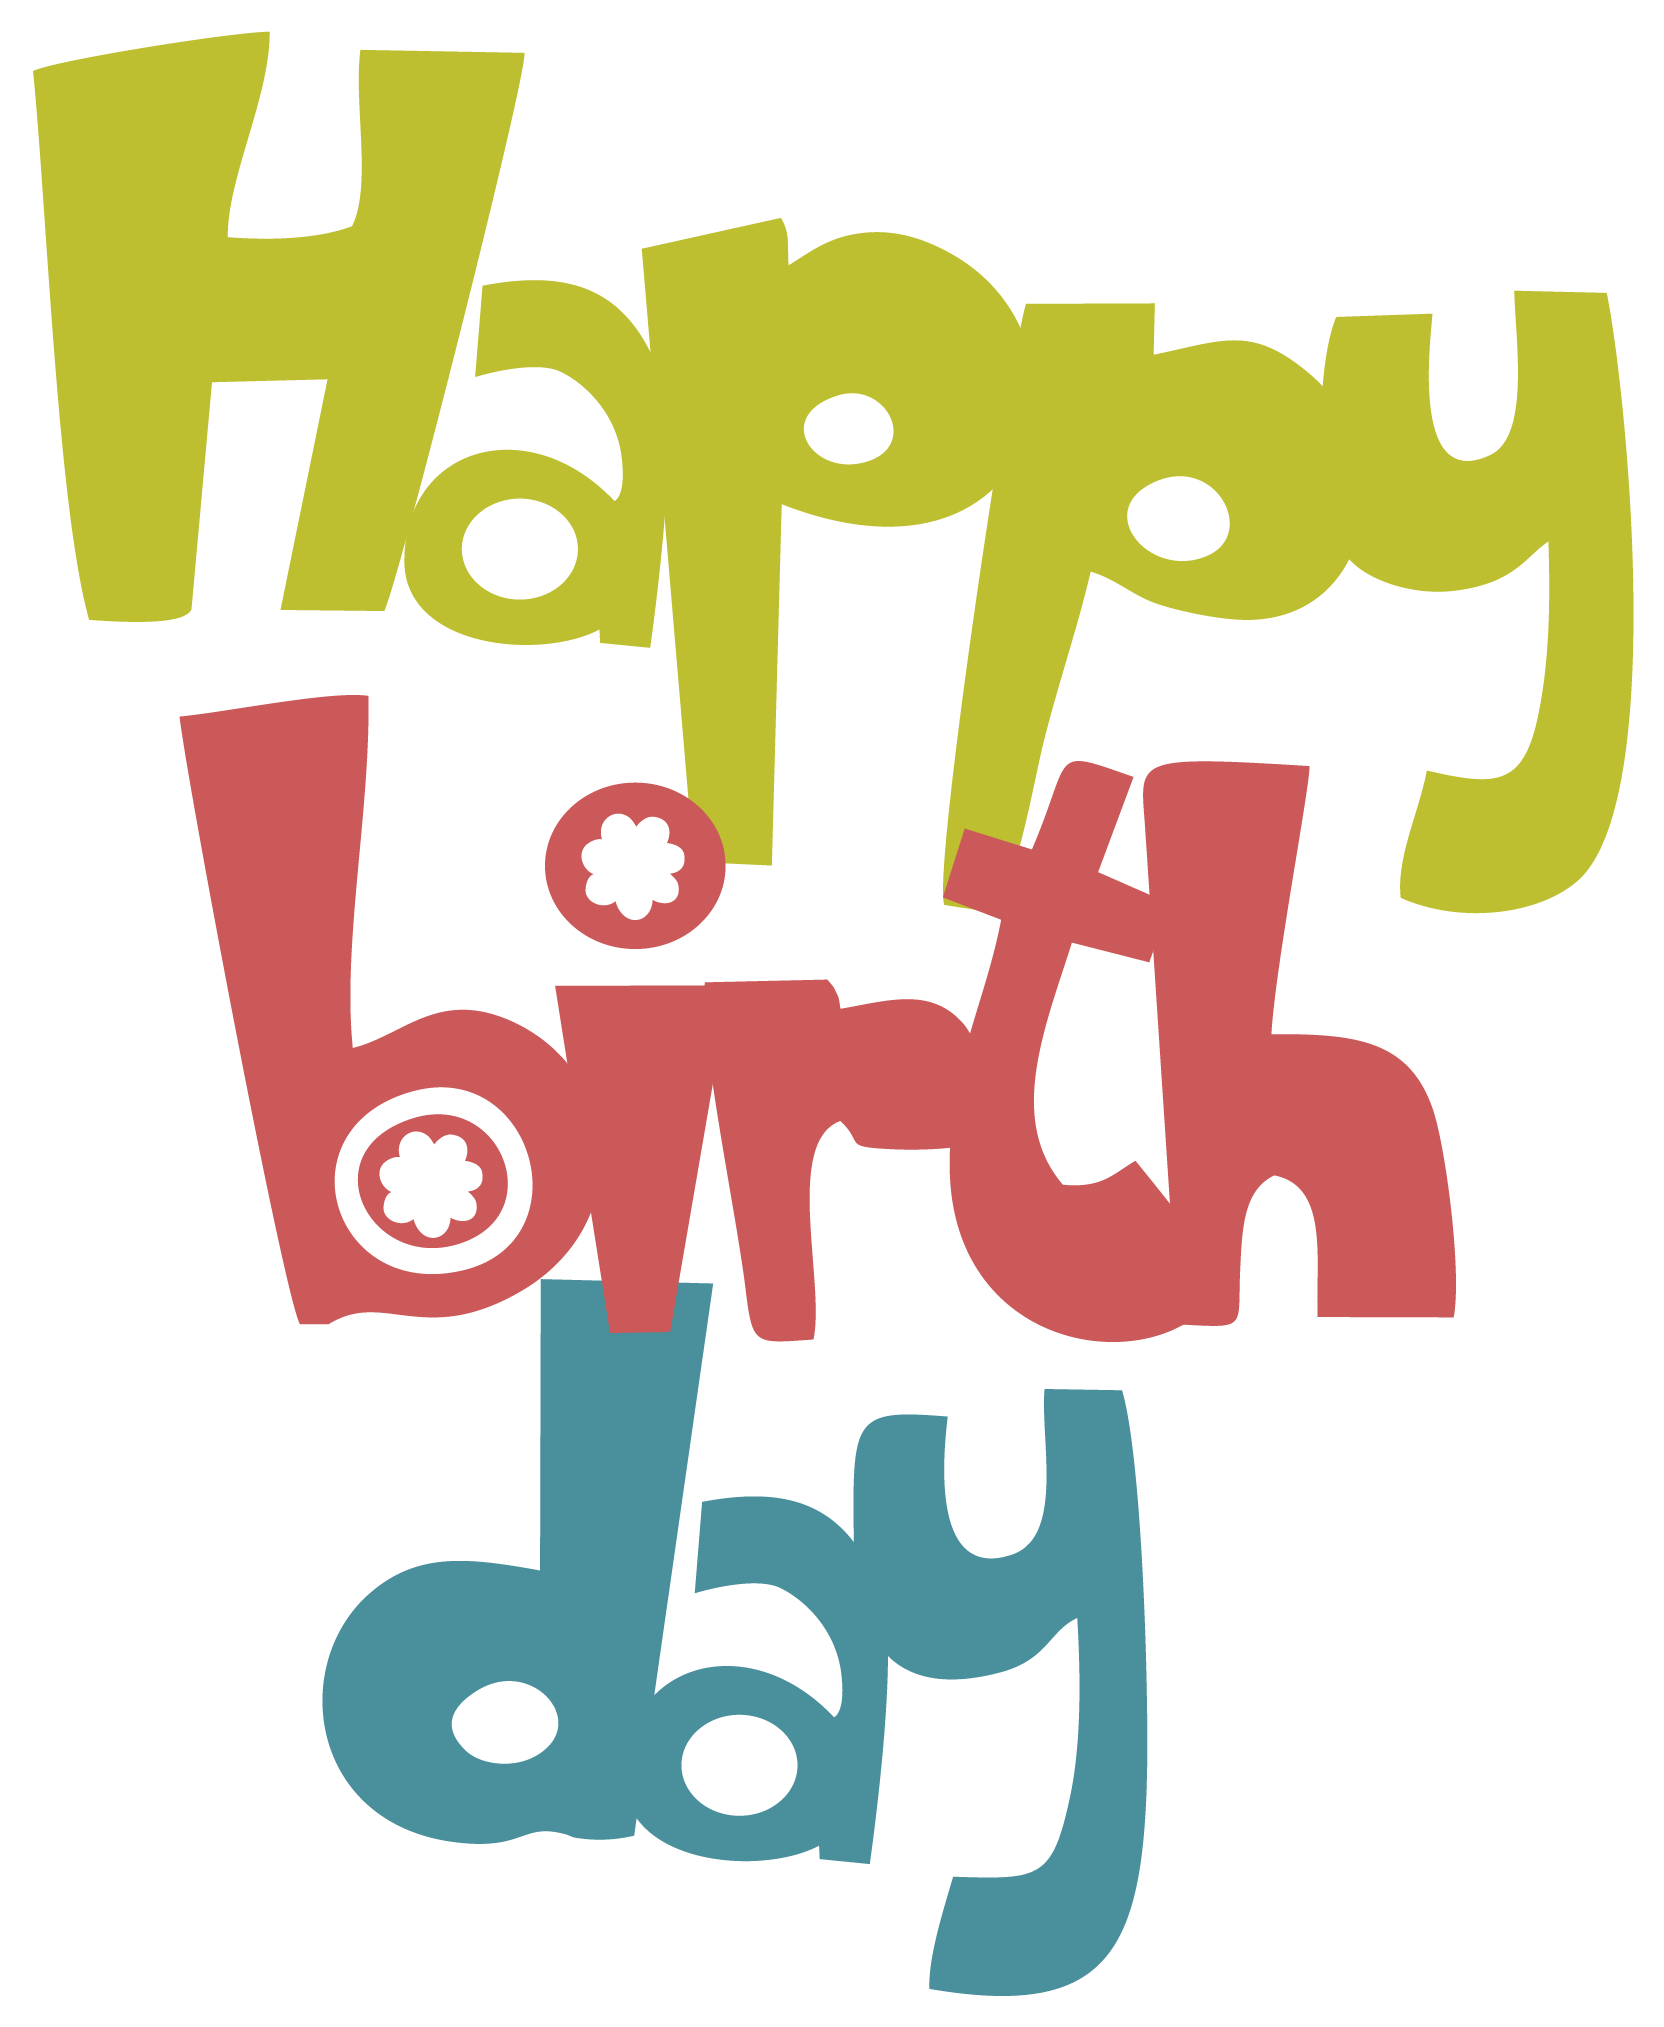 Giraffe Birthday Cake Greeting Card Happy Birthday - Giraffe Birthday Cake Greeting Card Happy Birthday (2144x2144)